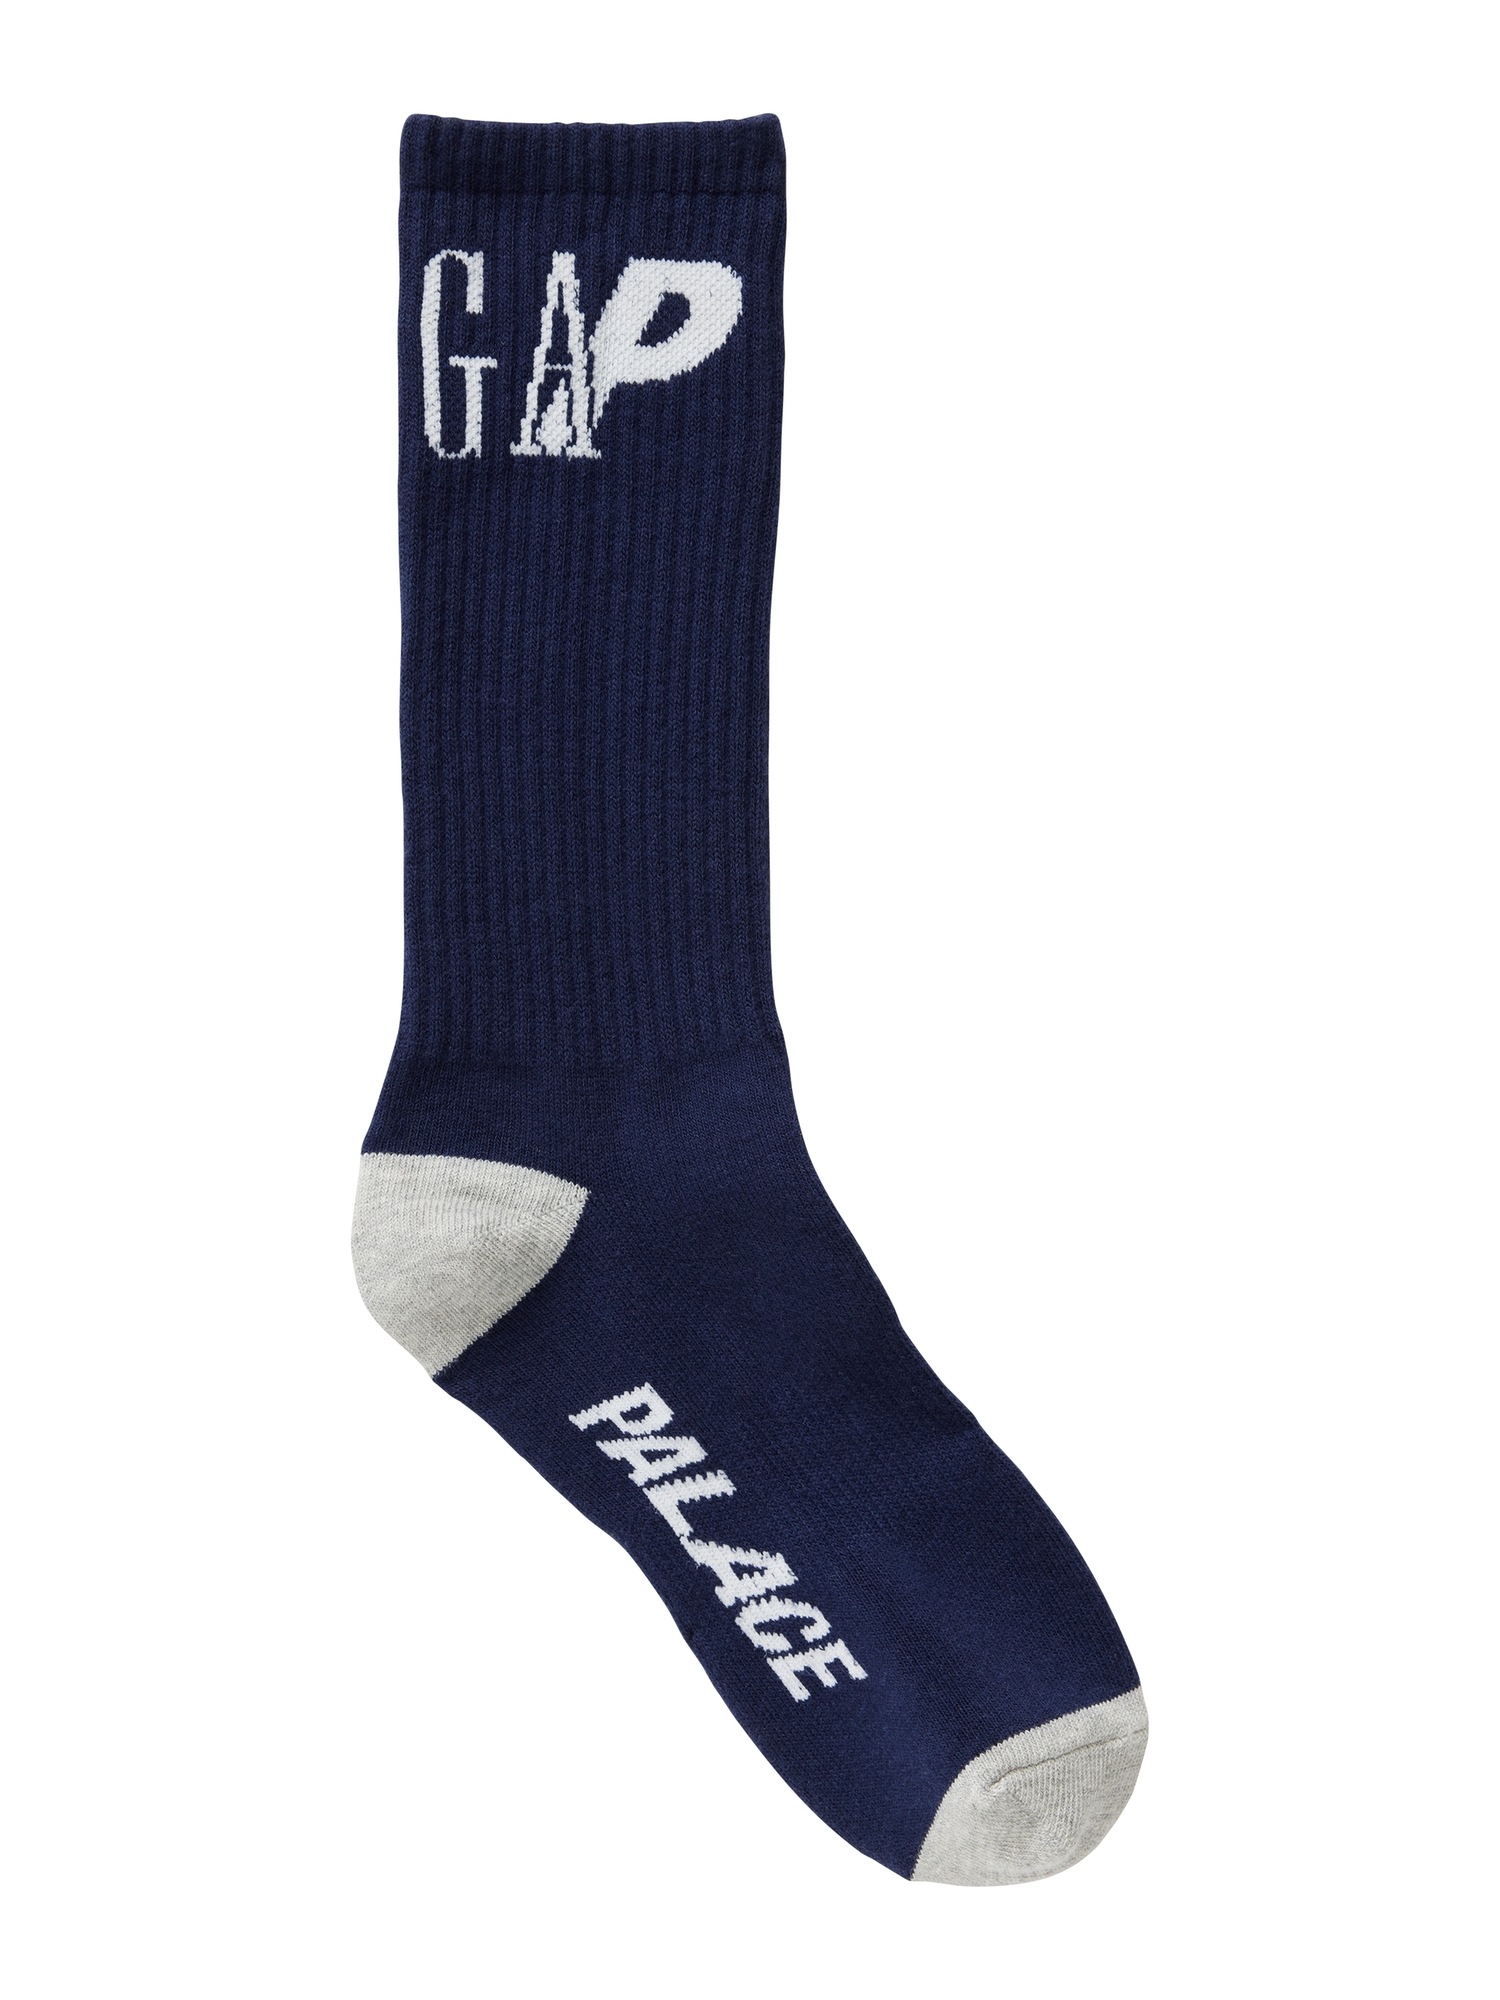 Palace Gap Crew Sock